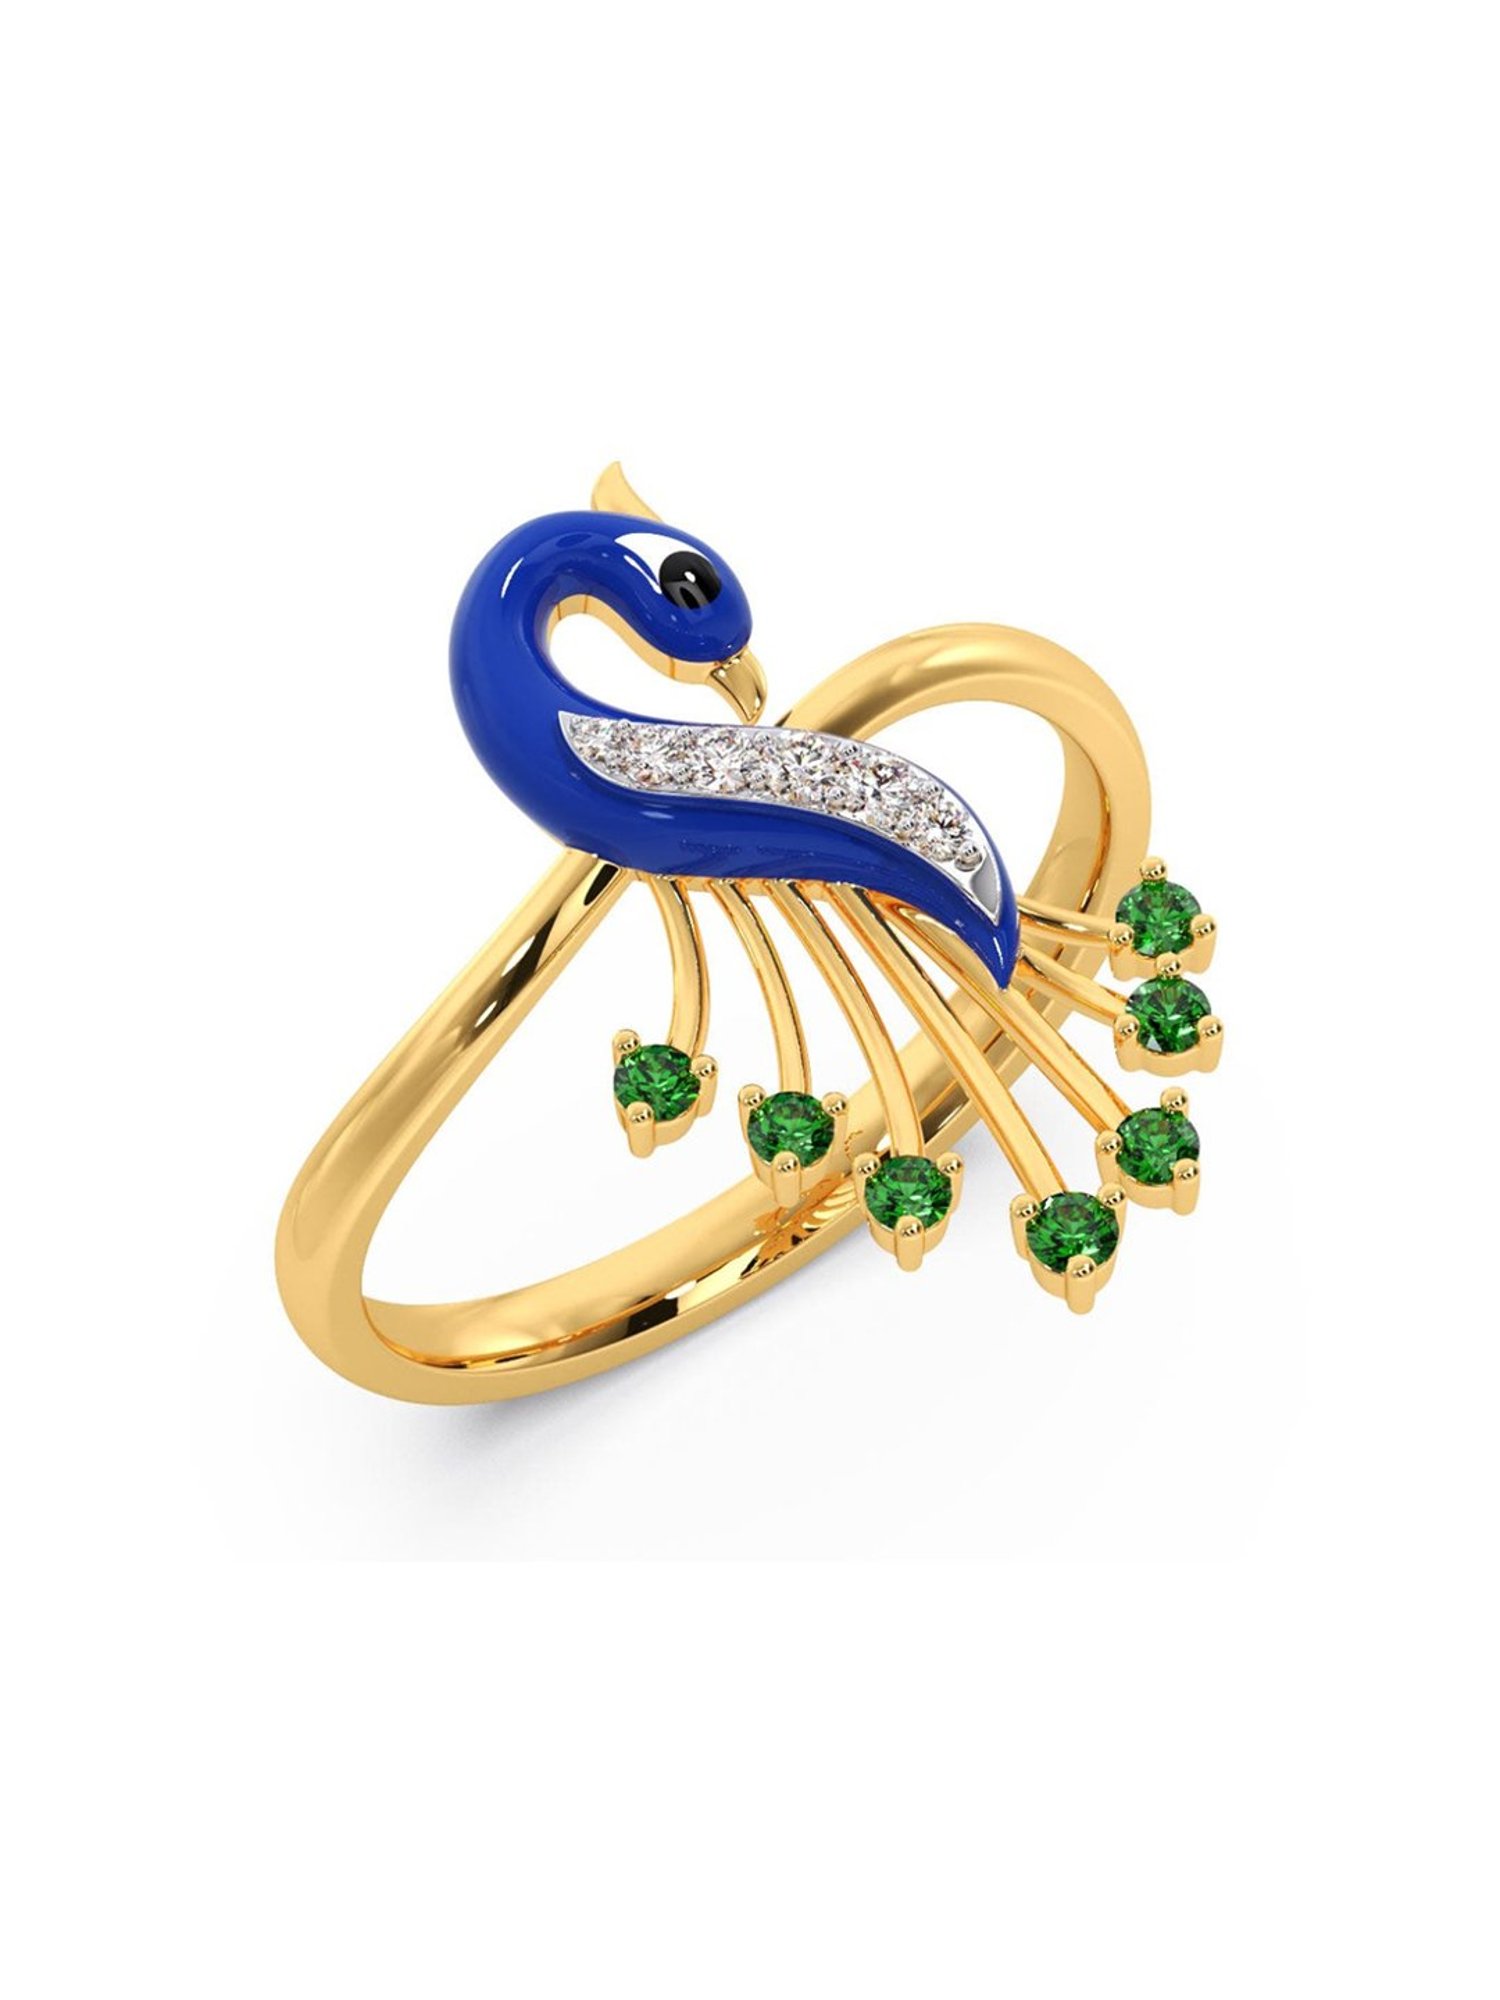 Buy latest rings online | Kalyan Jewellers